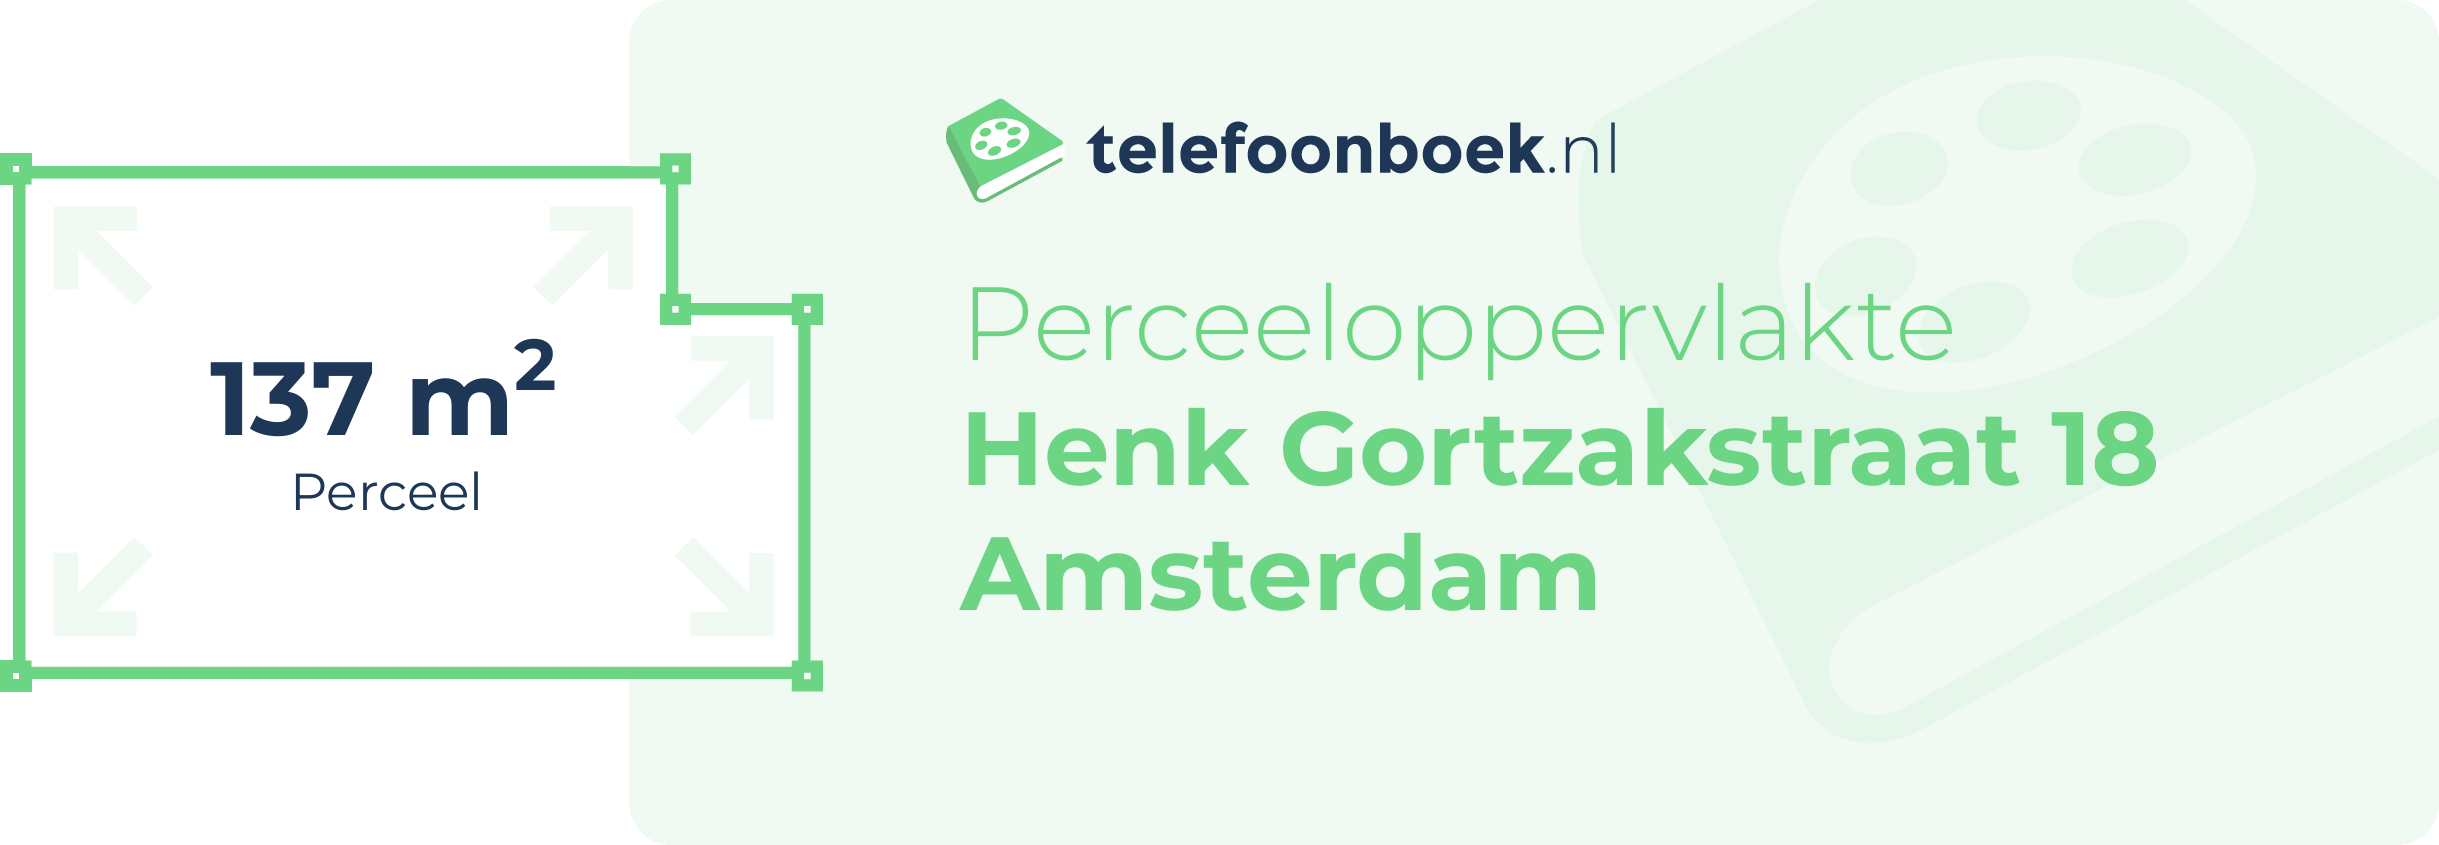 Perceeloppervlakte Henk Gortzakstraat 18 Amsterdam